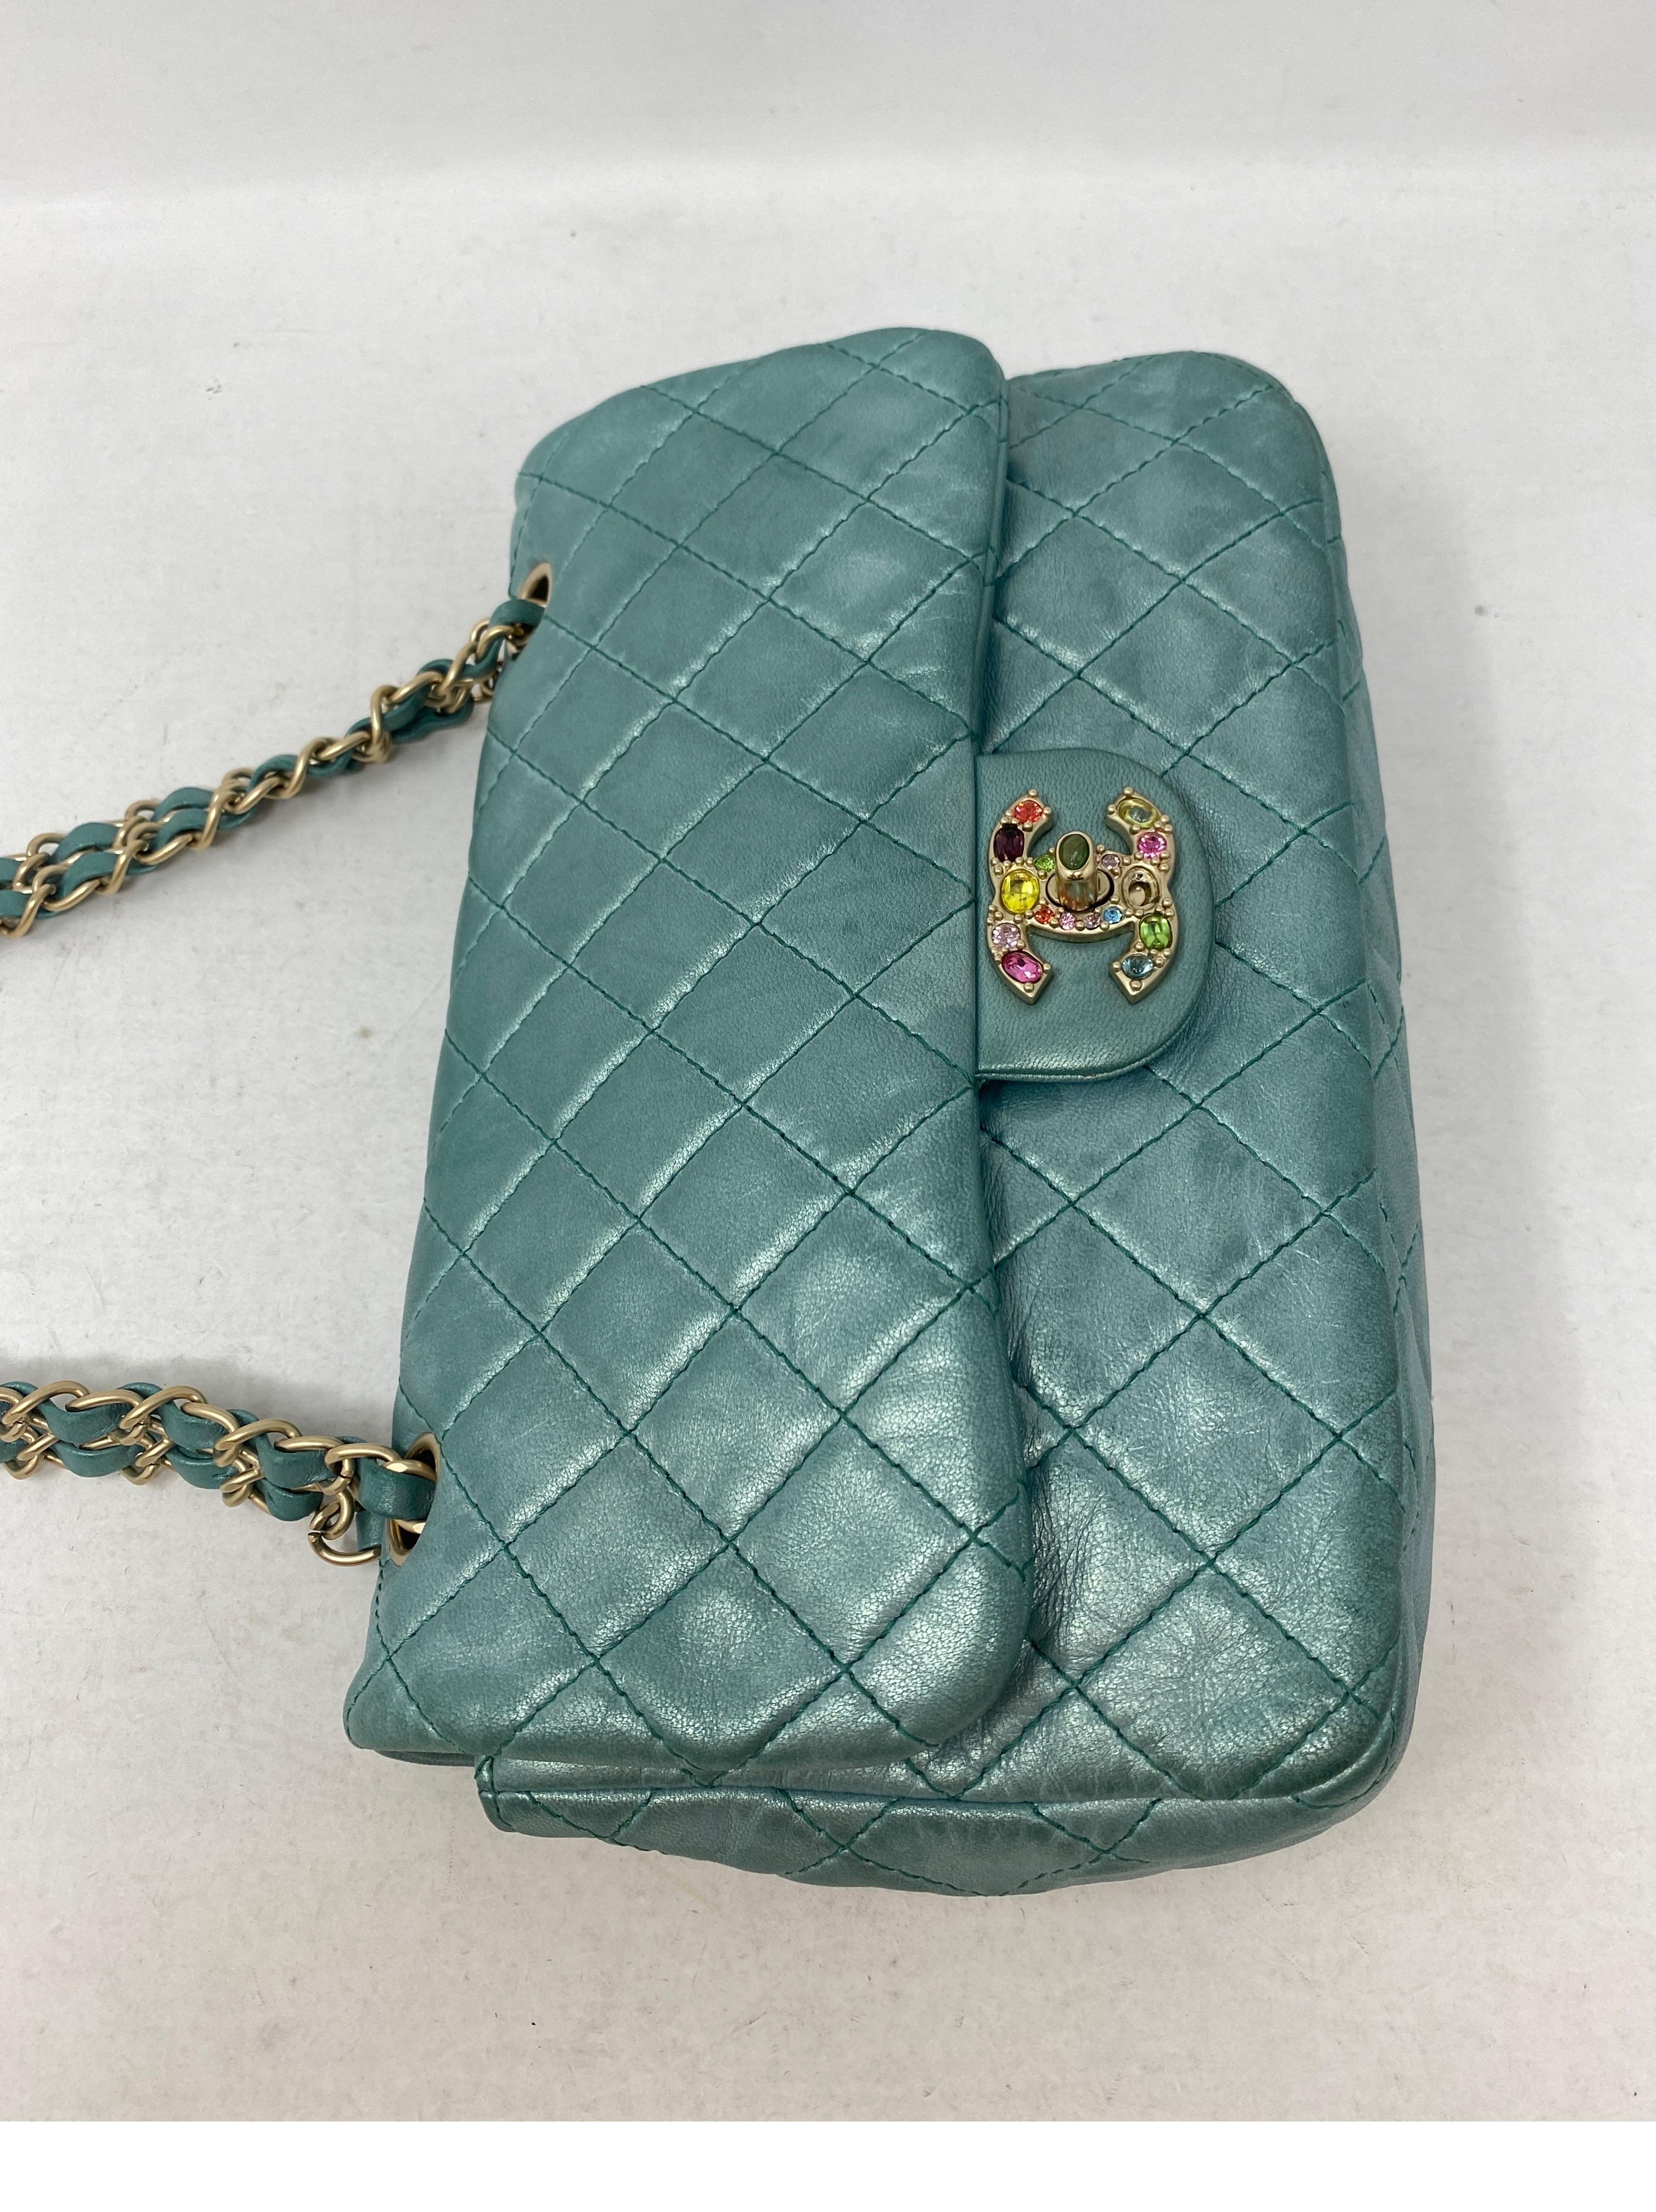 Chanel Teal Jeweled Bag  1